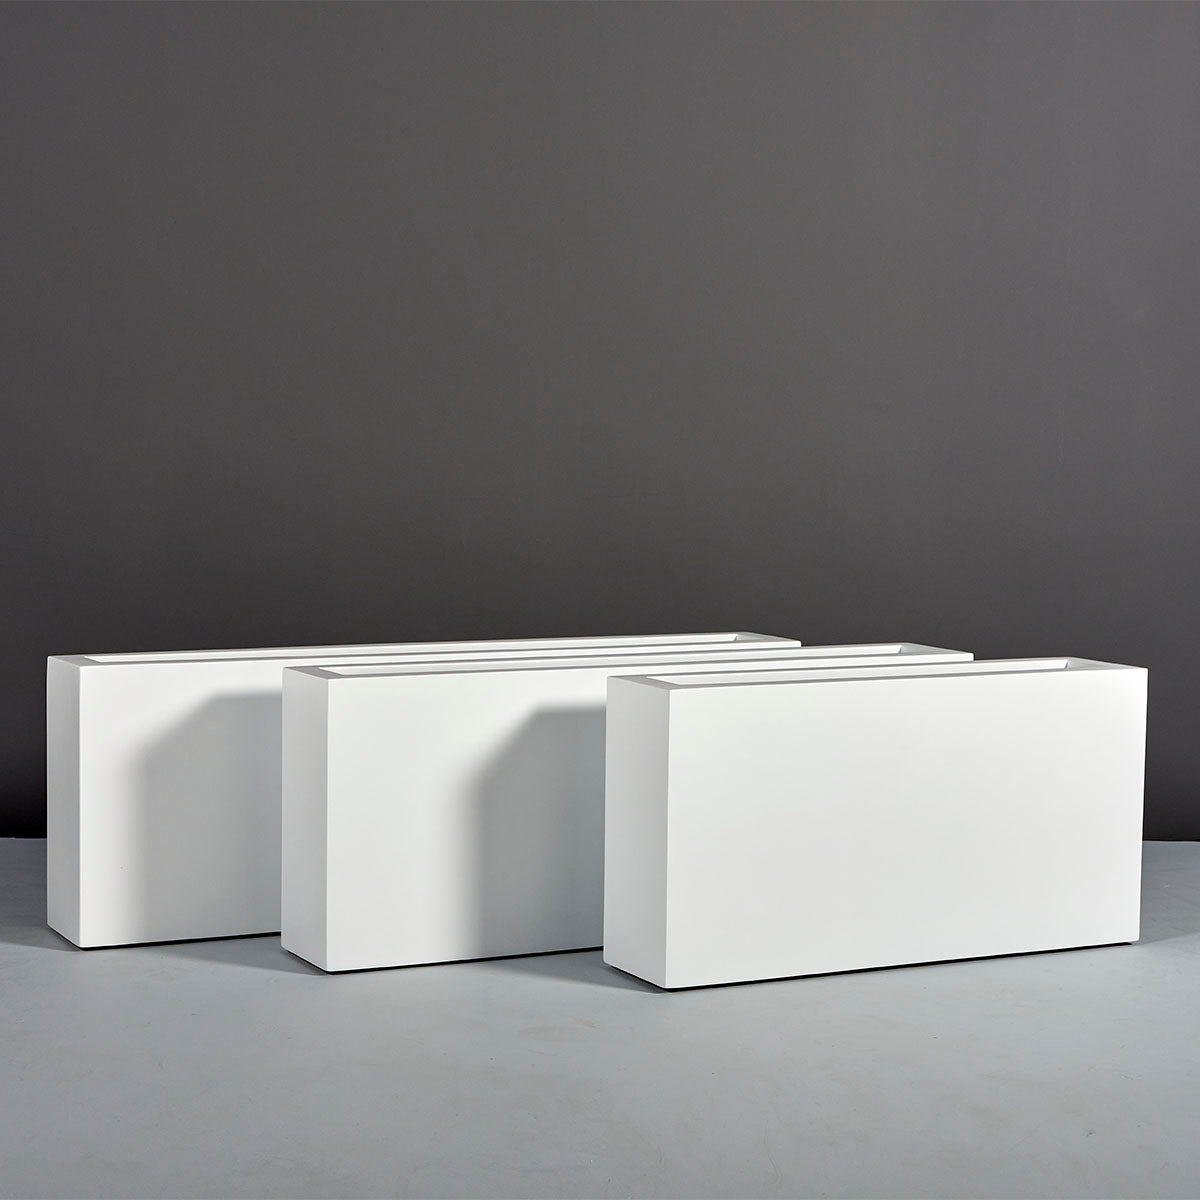 Camoux RECTANGULAR FIBERGLASS PLANTER BOX - Size 54"L x 8"W x 18"H